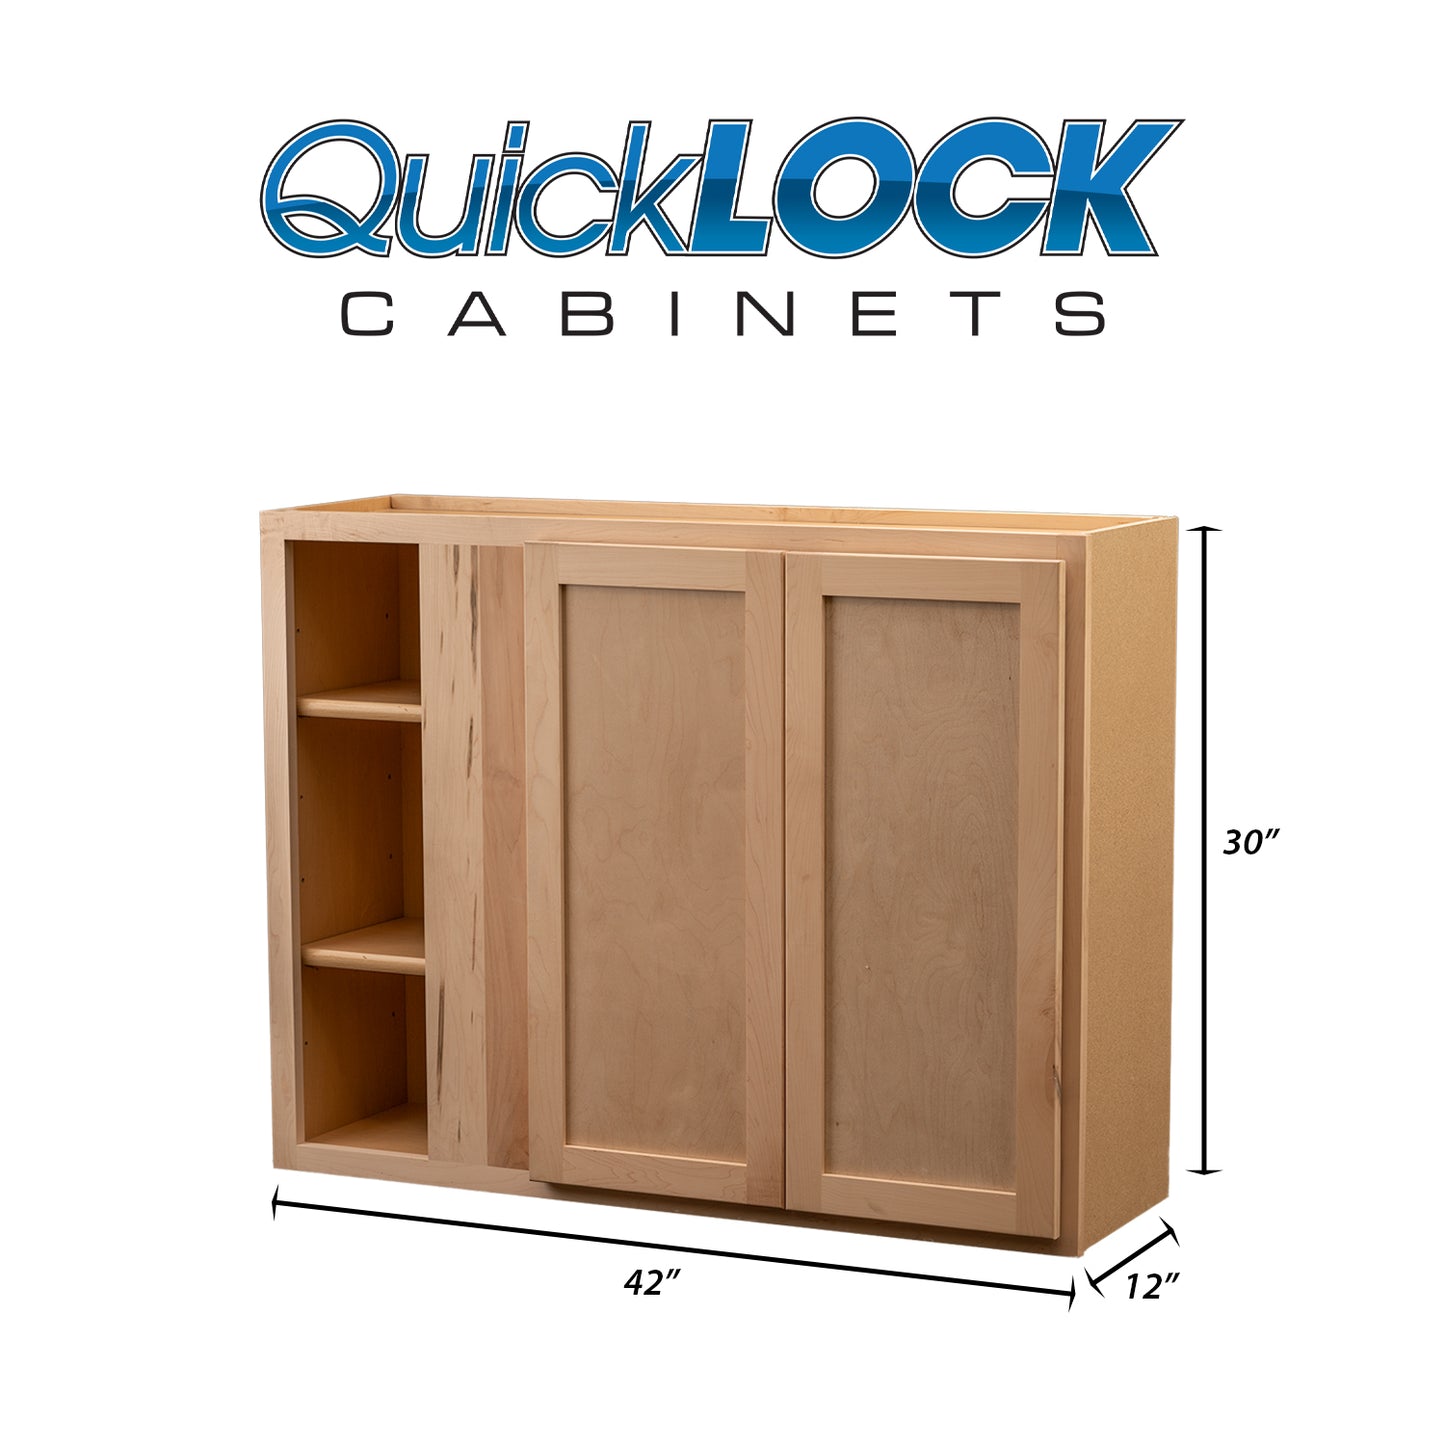 Quicklock RTA (Ready-to-Assemble) Raw Maple 42"Wx30"Hx12"D Blind Corner Wall Cabinet